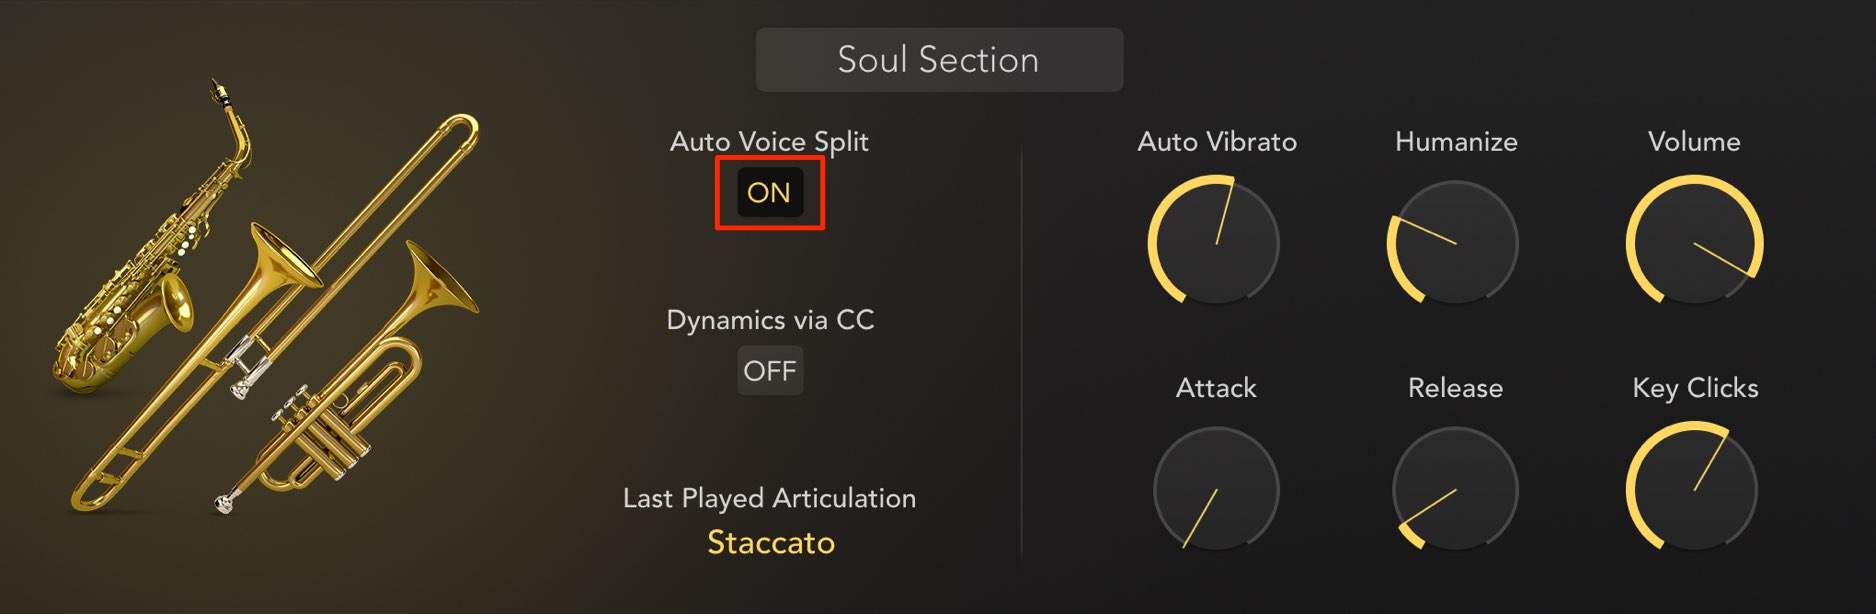 Auto Voice Split